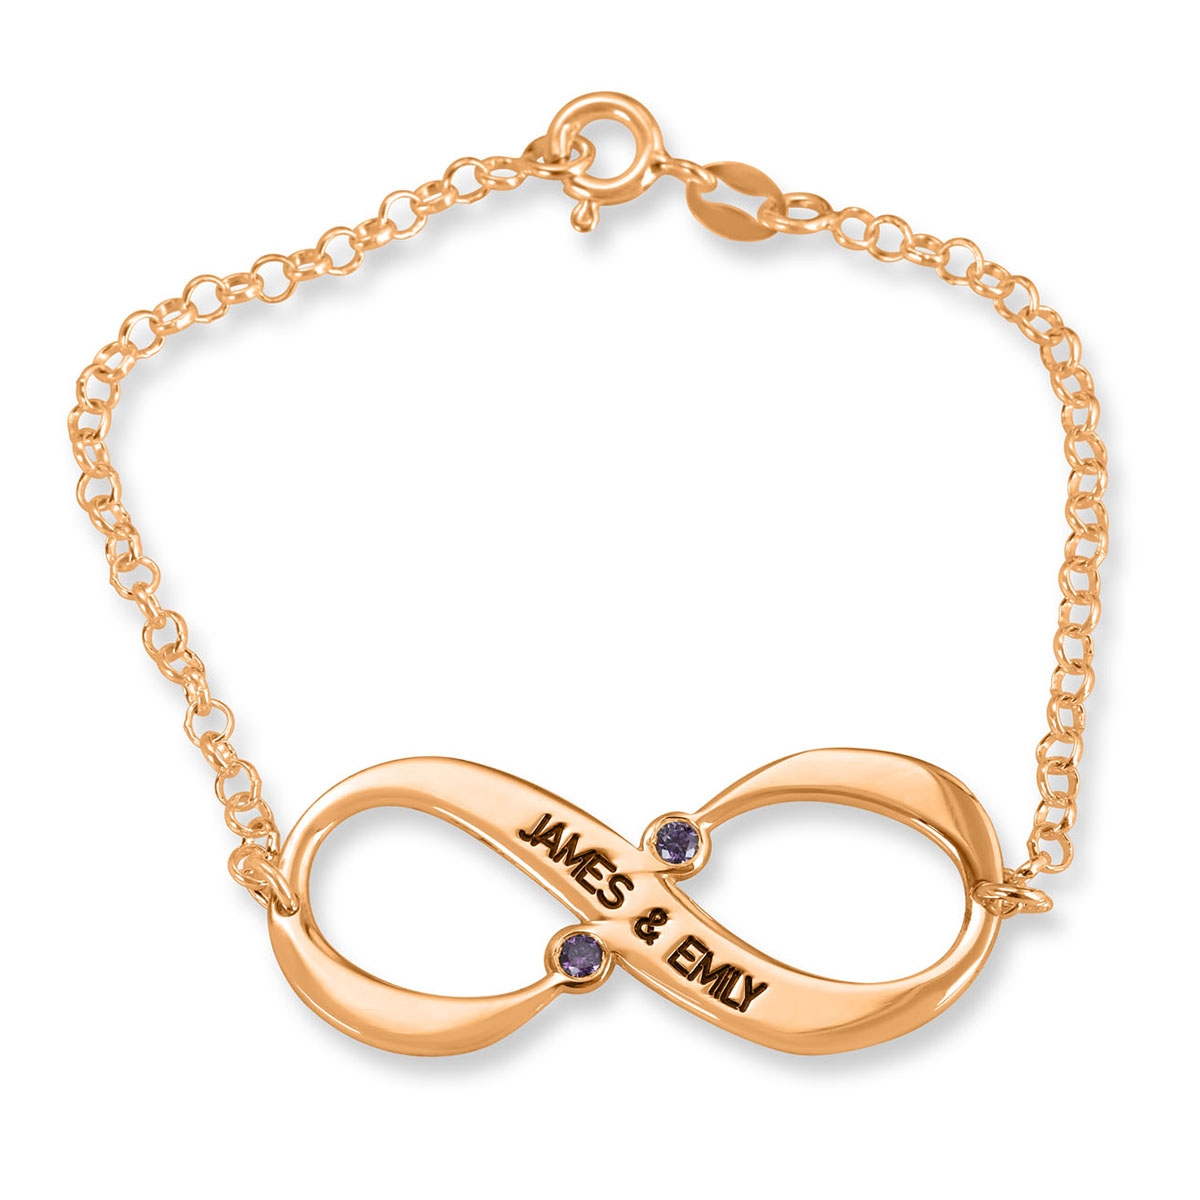 Buy Antiquestreet Name Bracelet Non-Precious Metal & Brass Bracelet for  Girls (Gold) (Initial) at Amazon.in